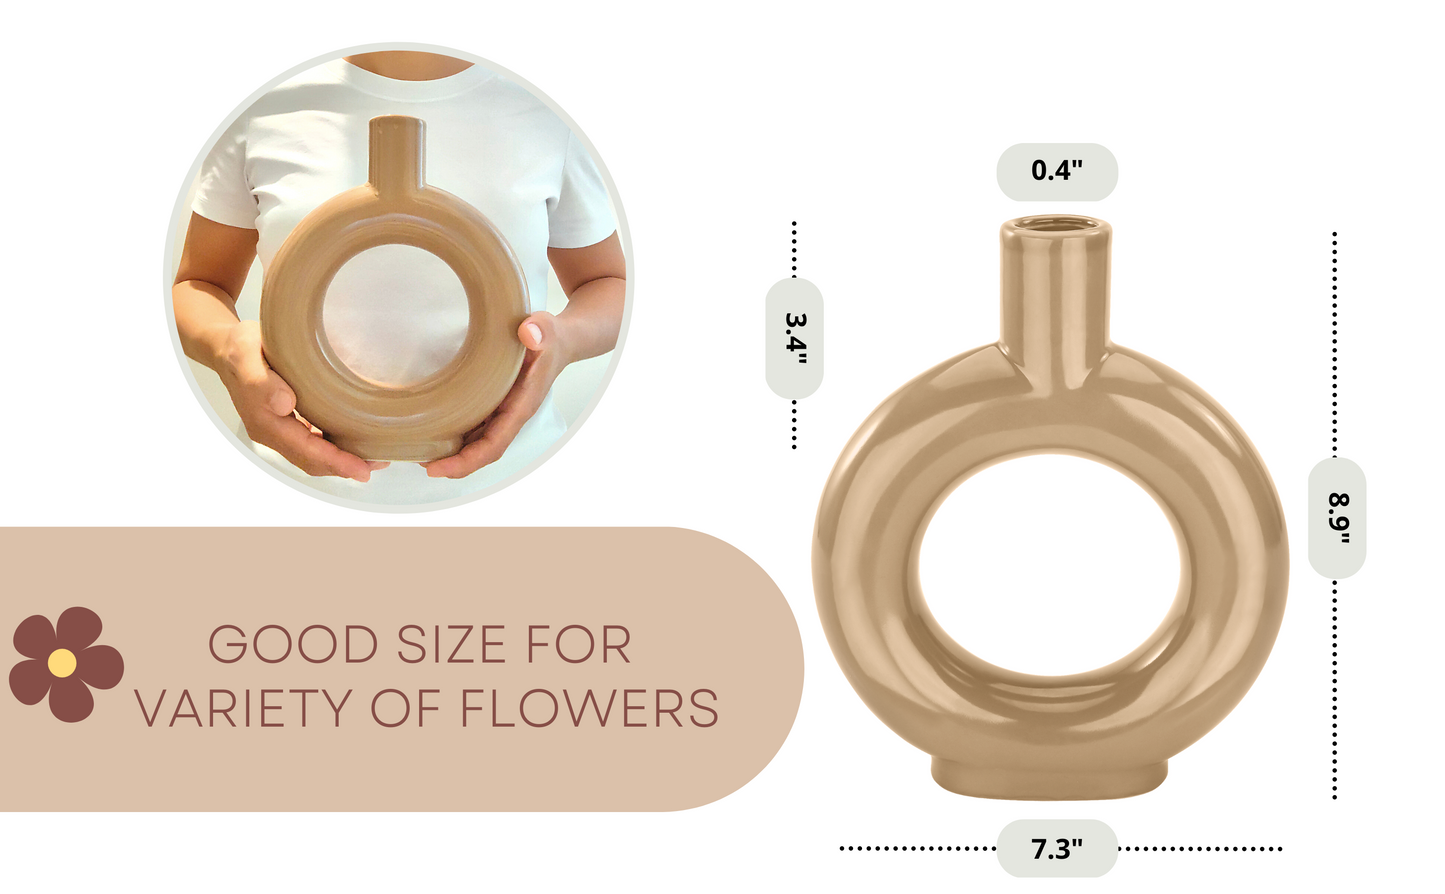 MIAJO Modern Decor Donut Vase, Ceramic Centerpiece for Home & Office, Housewarming Gift